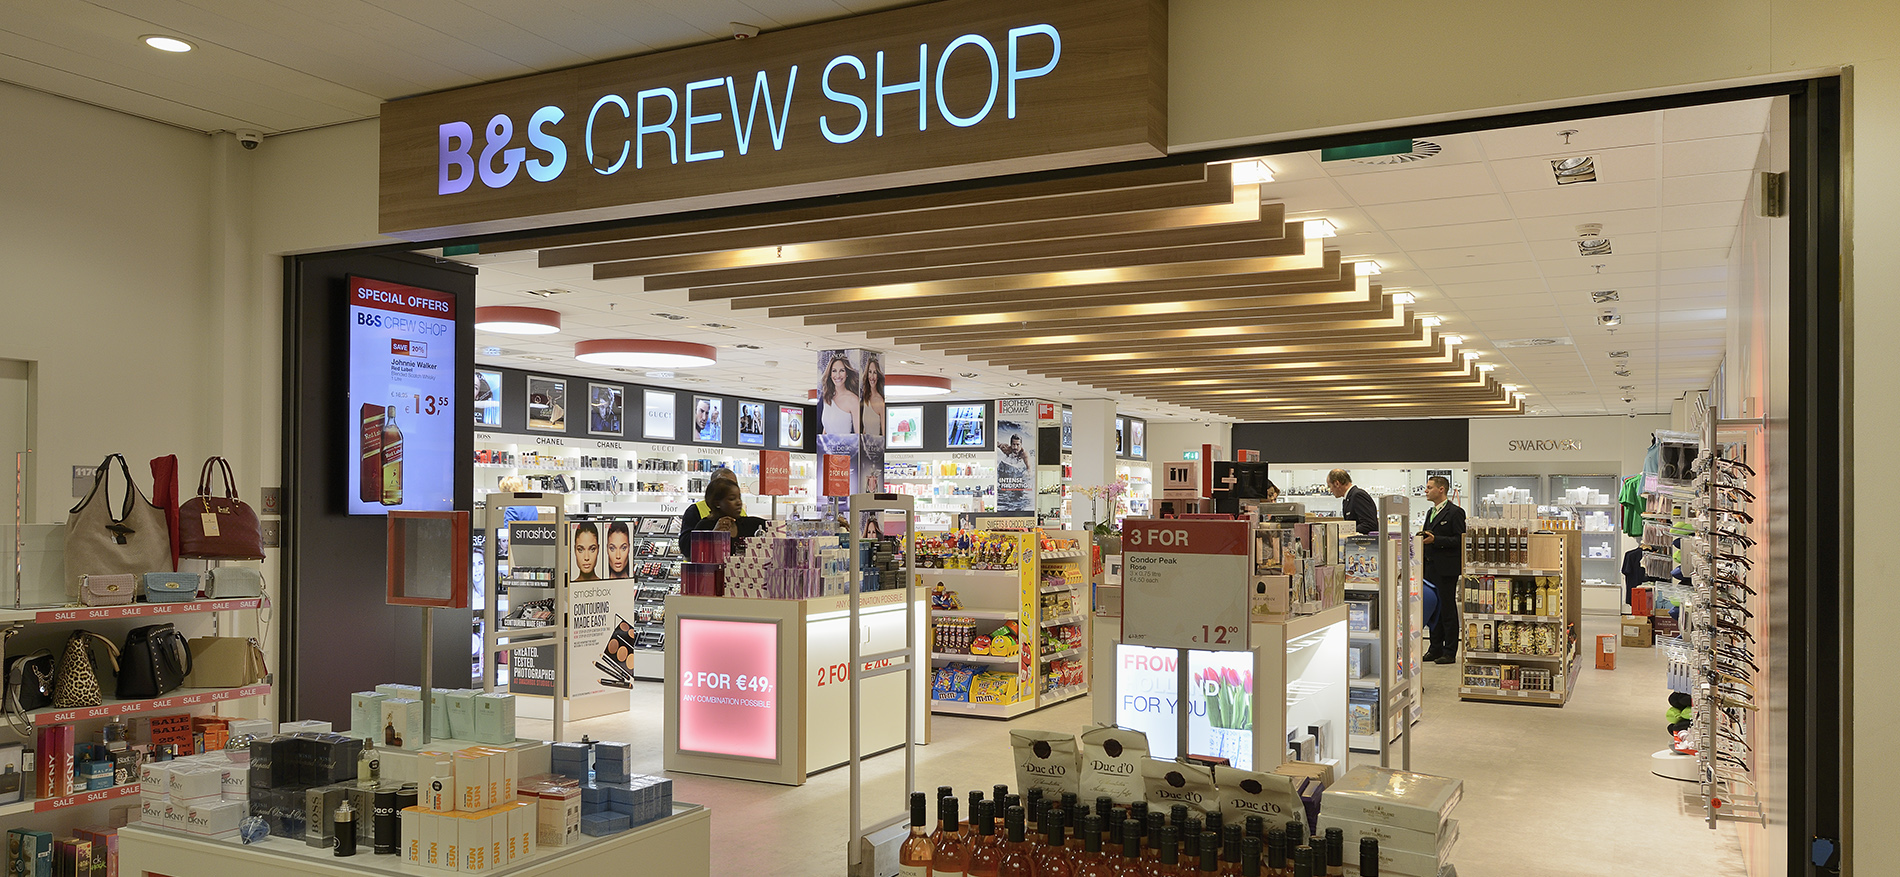 B&S Crewshop Airport Schiphol (NL) – Retail design and shopfitting - Retail design